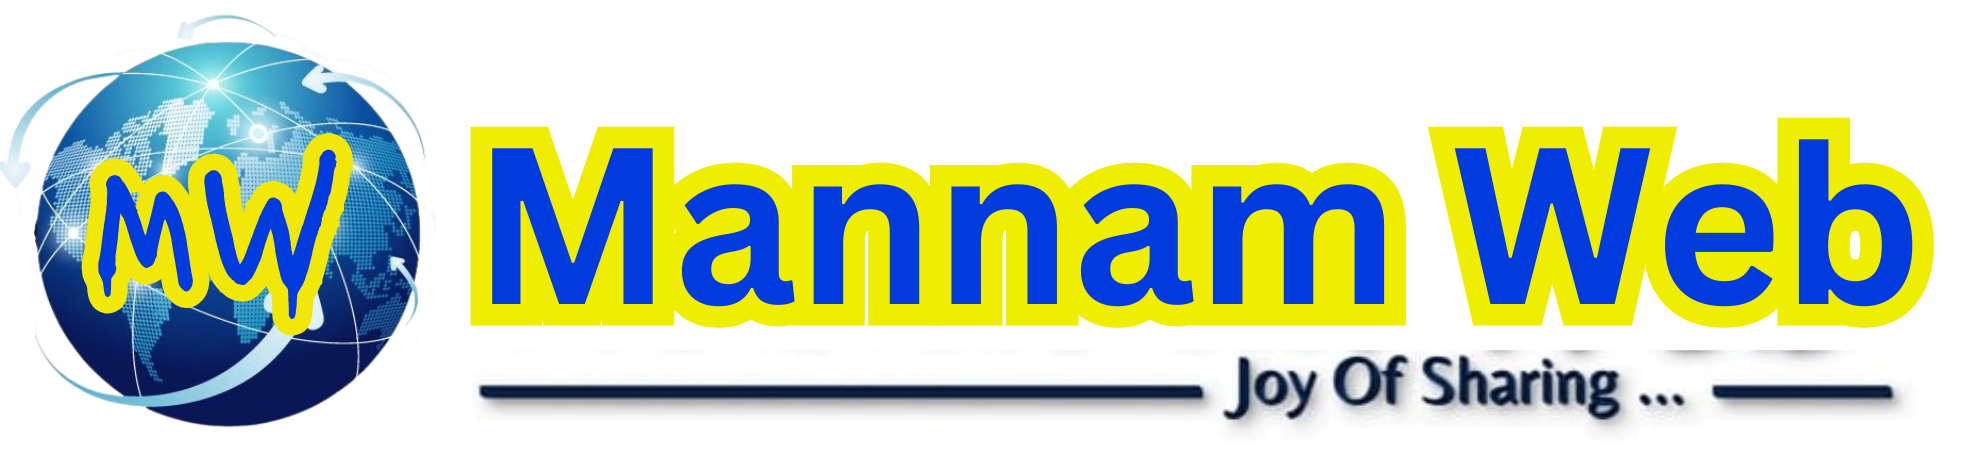 Mannamweb.com